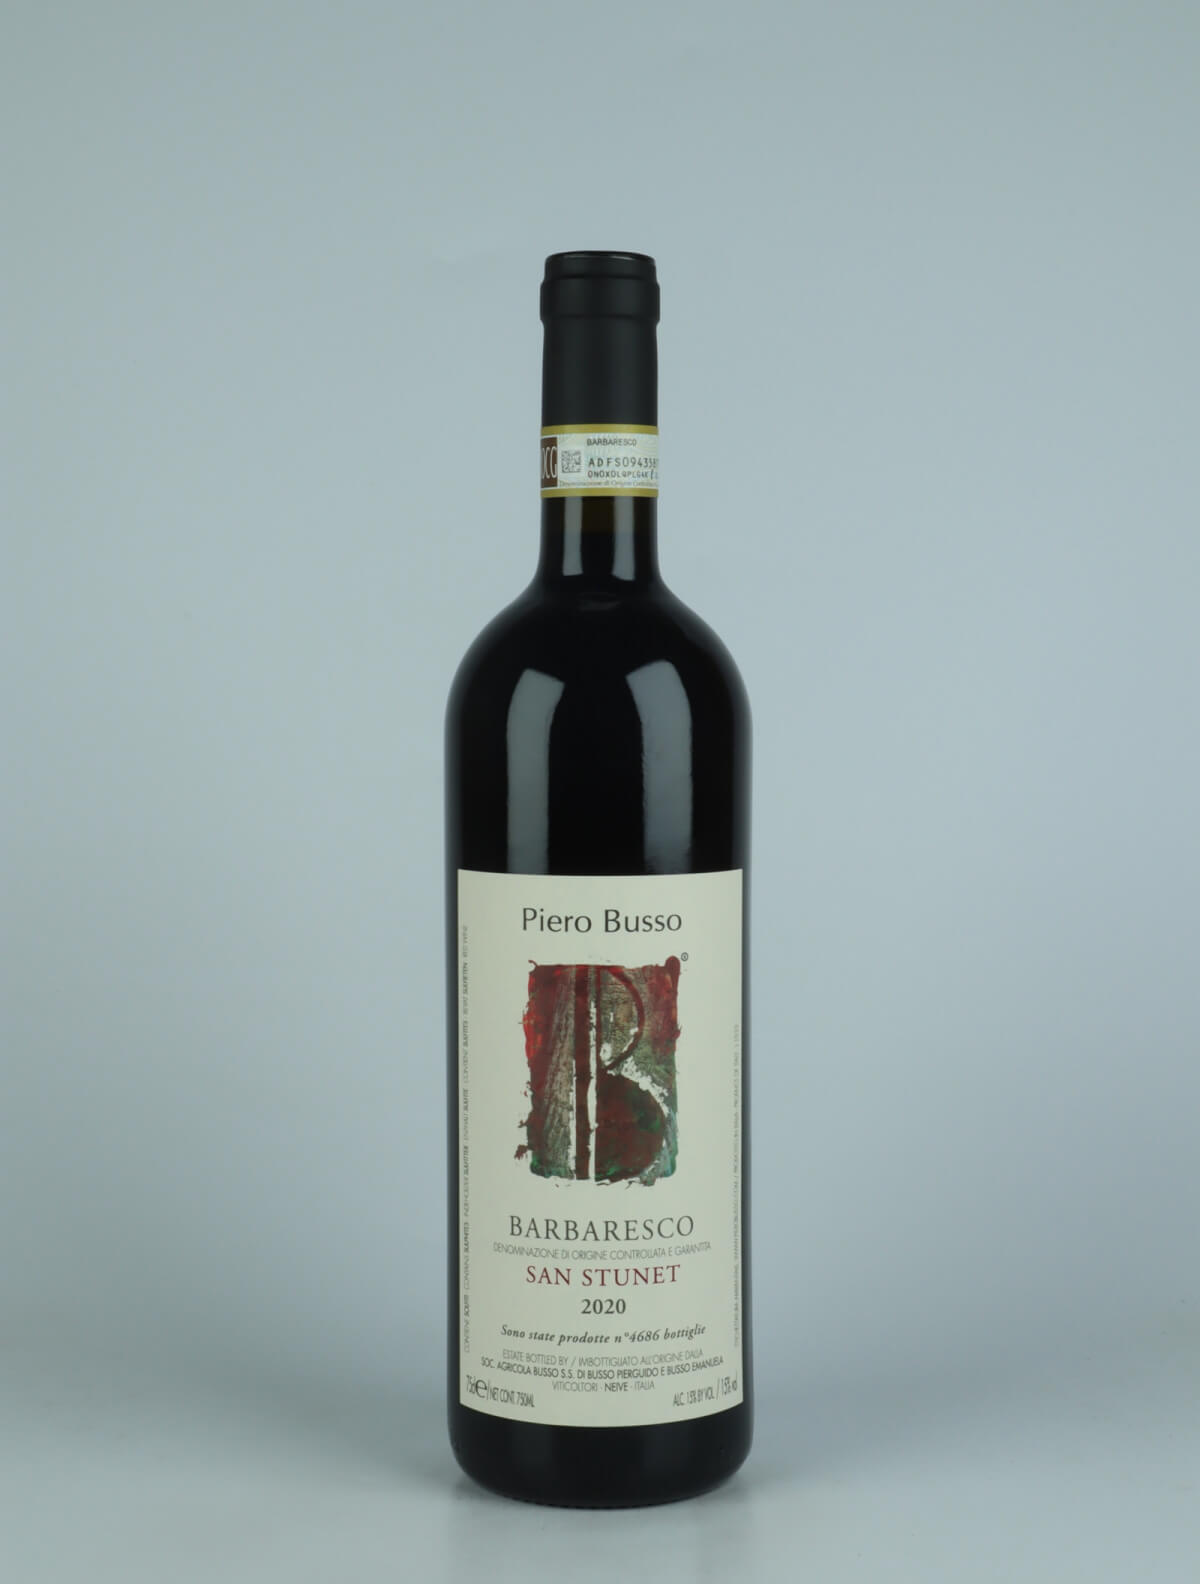 A bottle 2020 Barbaresco San Stunet Red wine from Piero Busso, Piedmont in Italy